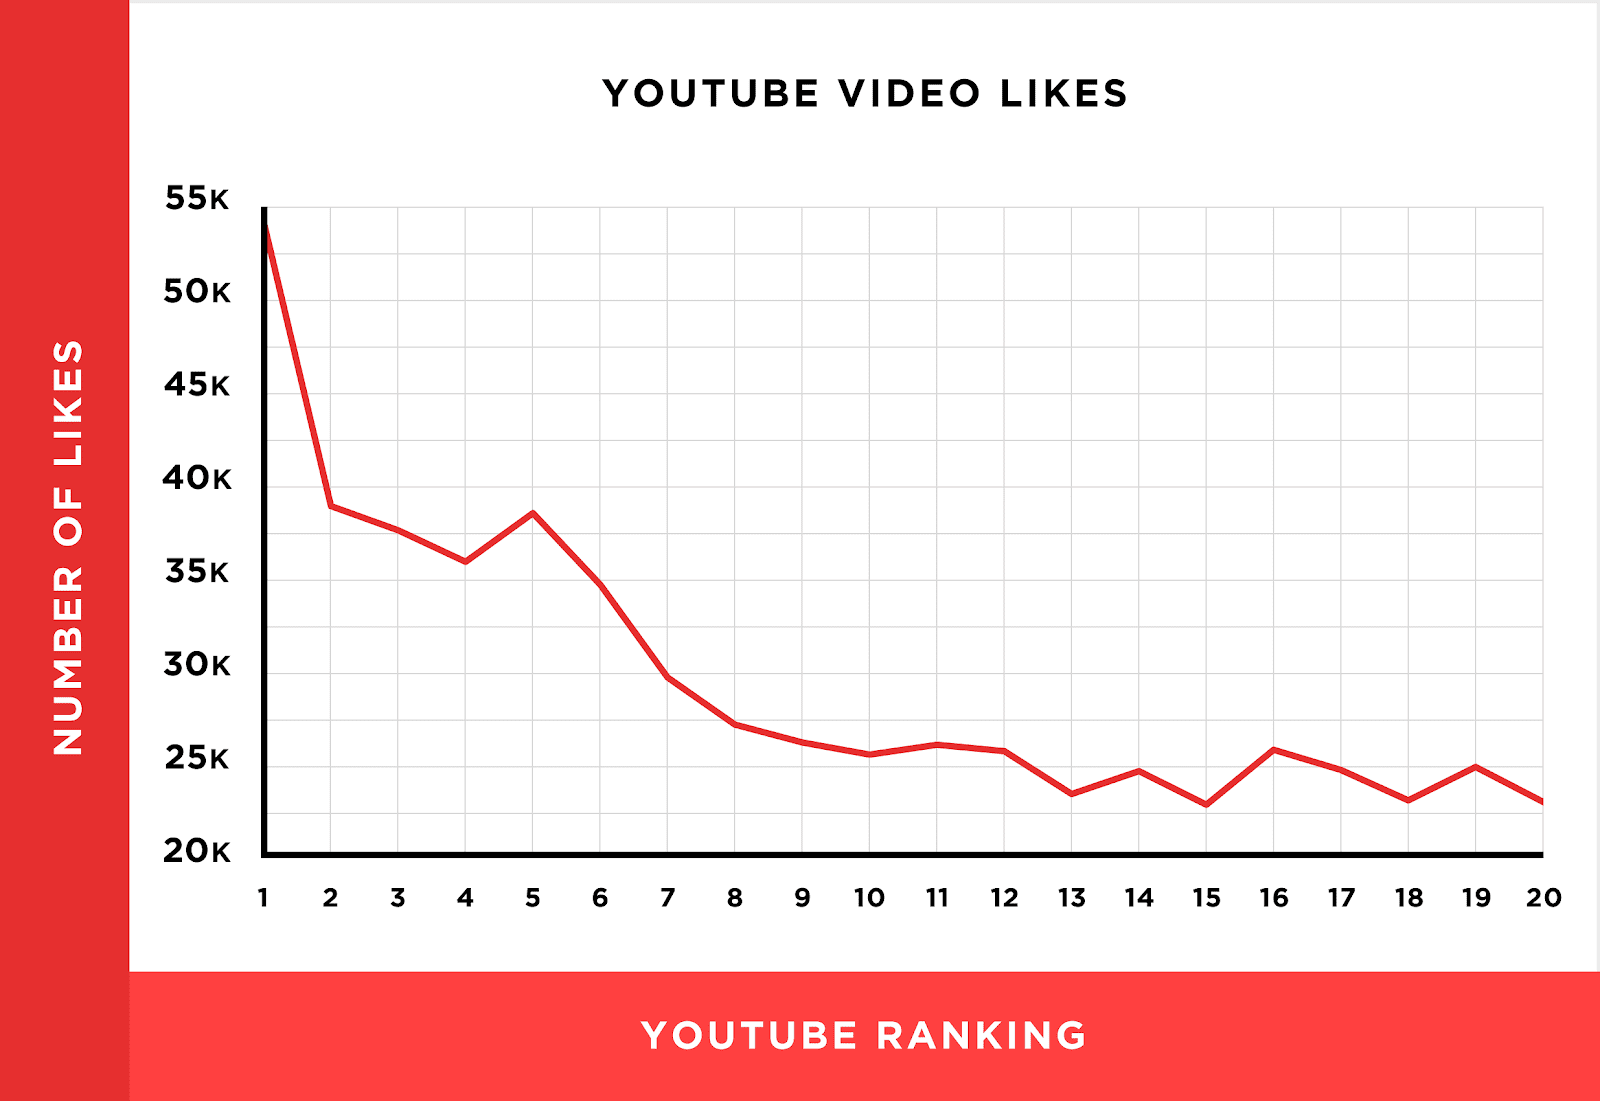 youtube likes and rankings chart